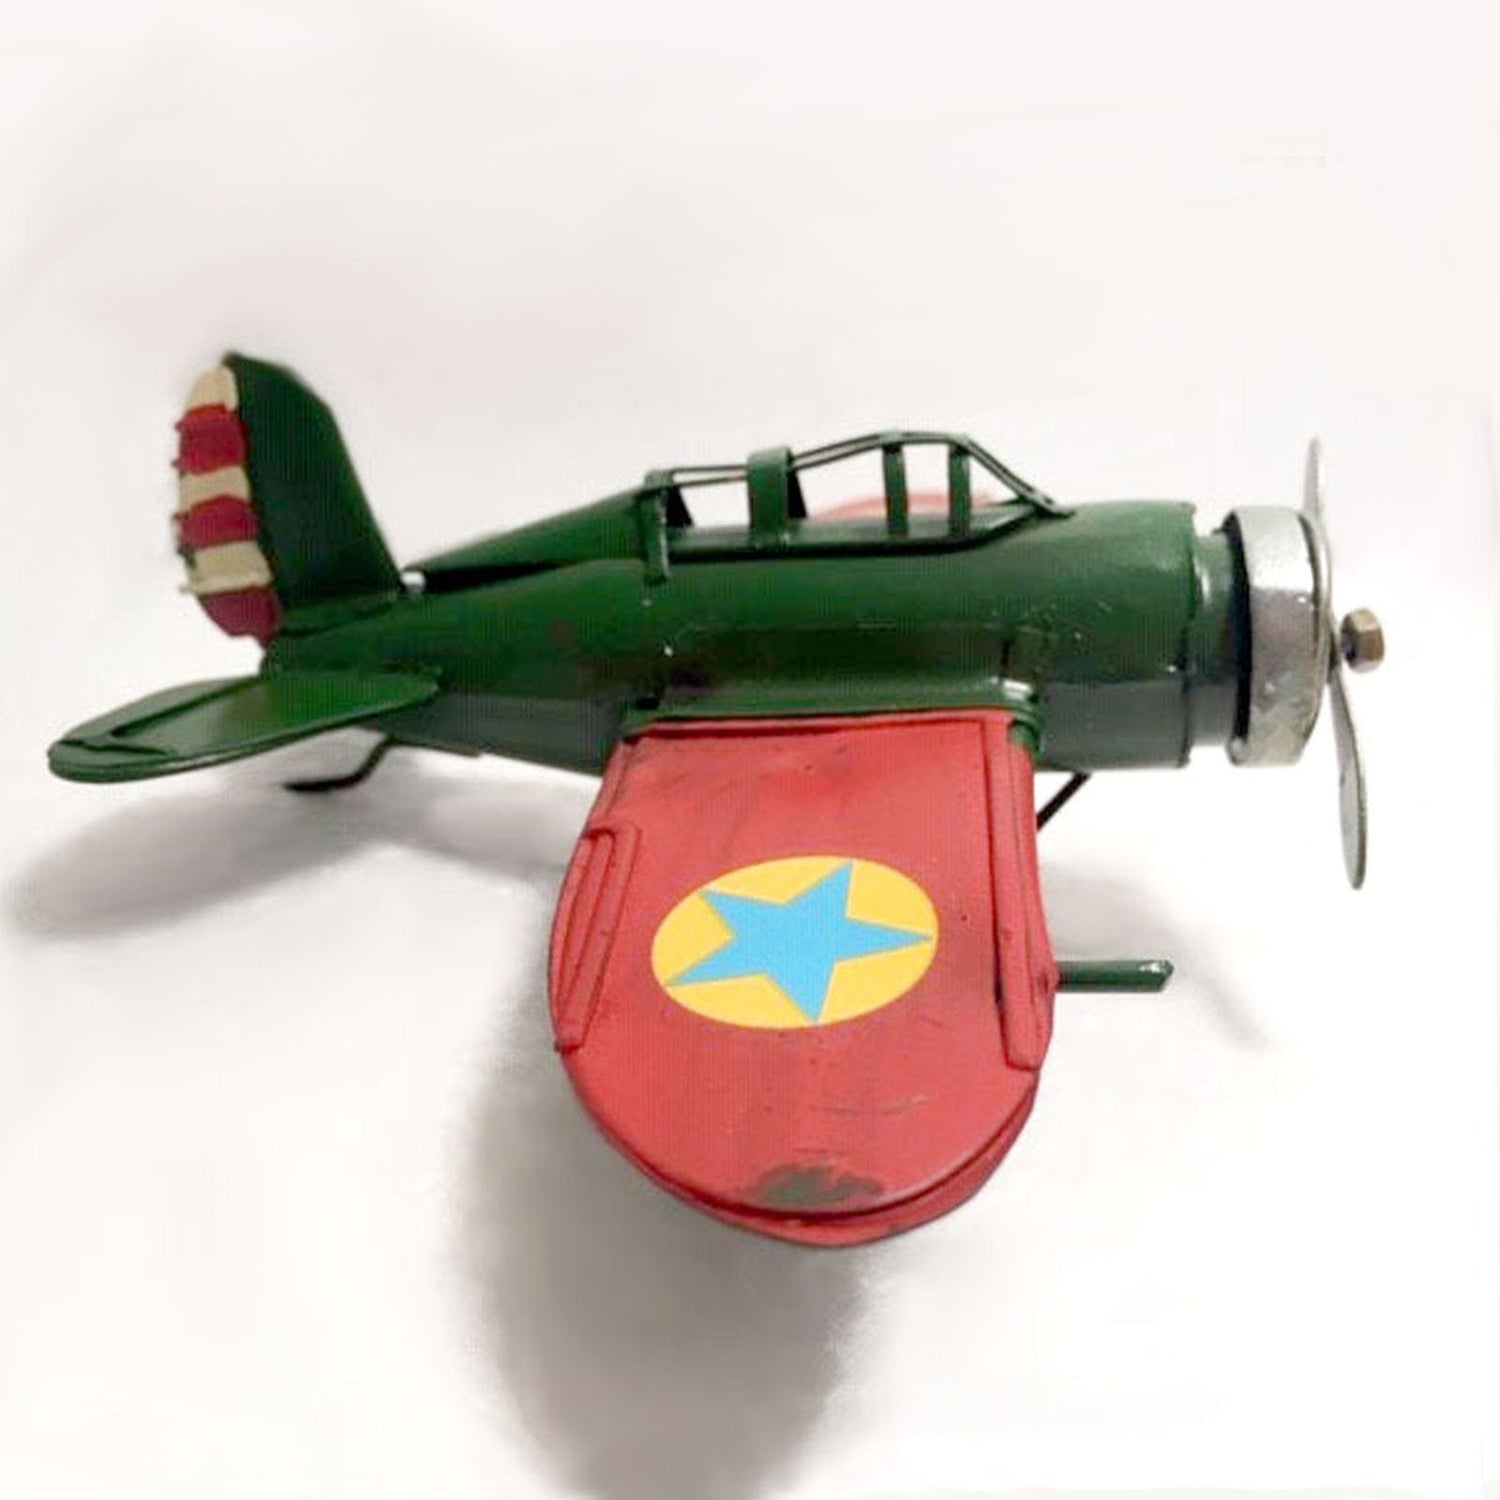 Green Mini Roamer Plane - Small Vintage Style Metal Plane.